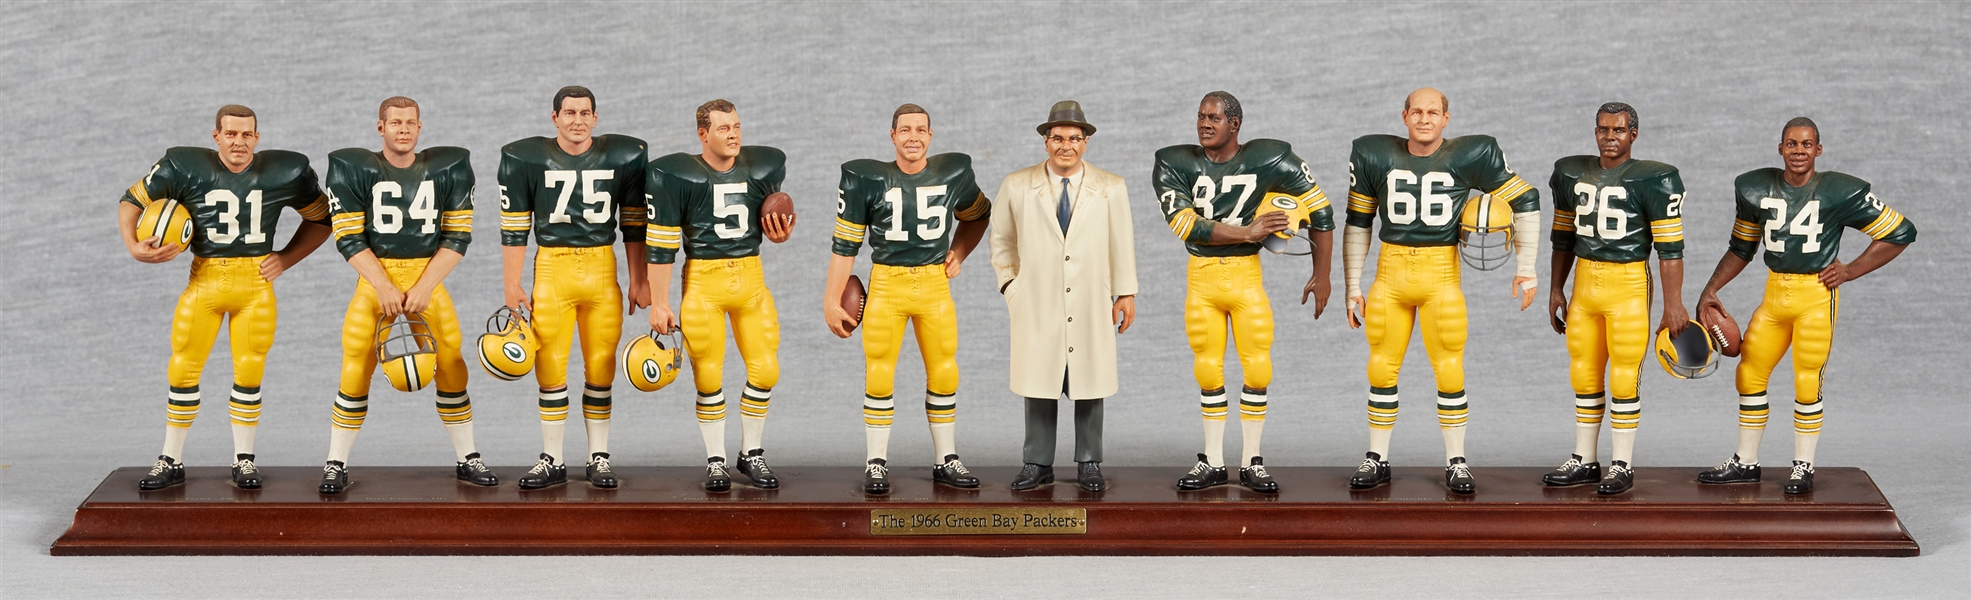 1966 Green Bay Packers Danbury Mint Figures (10)